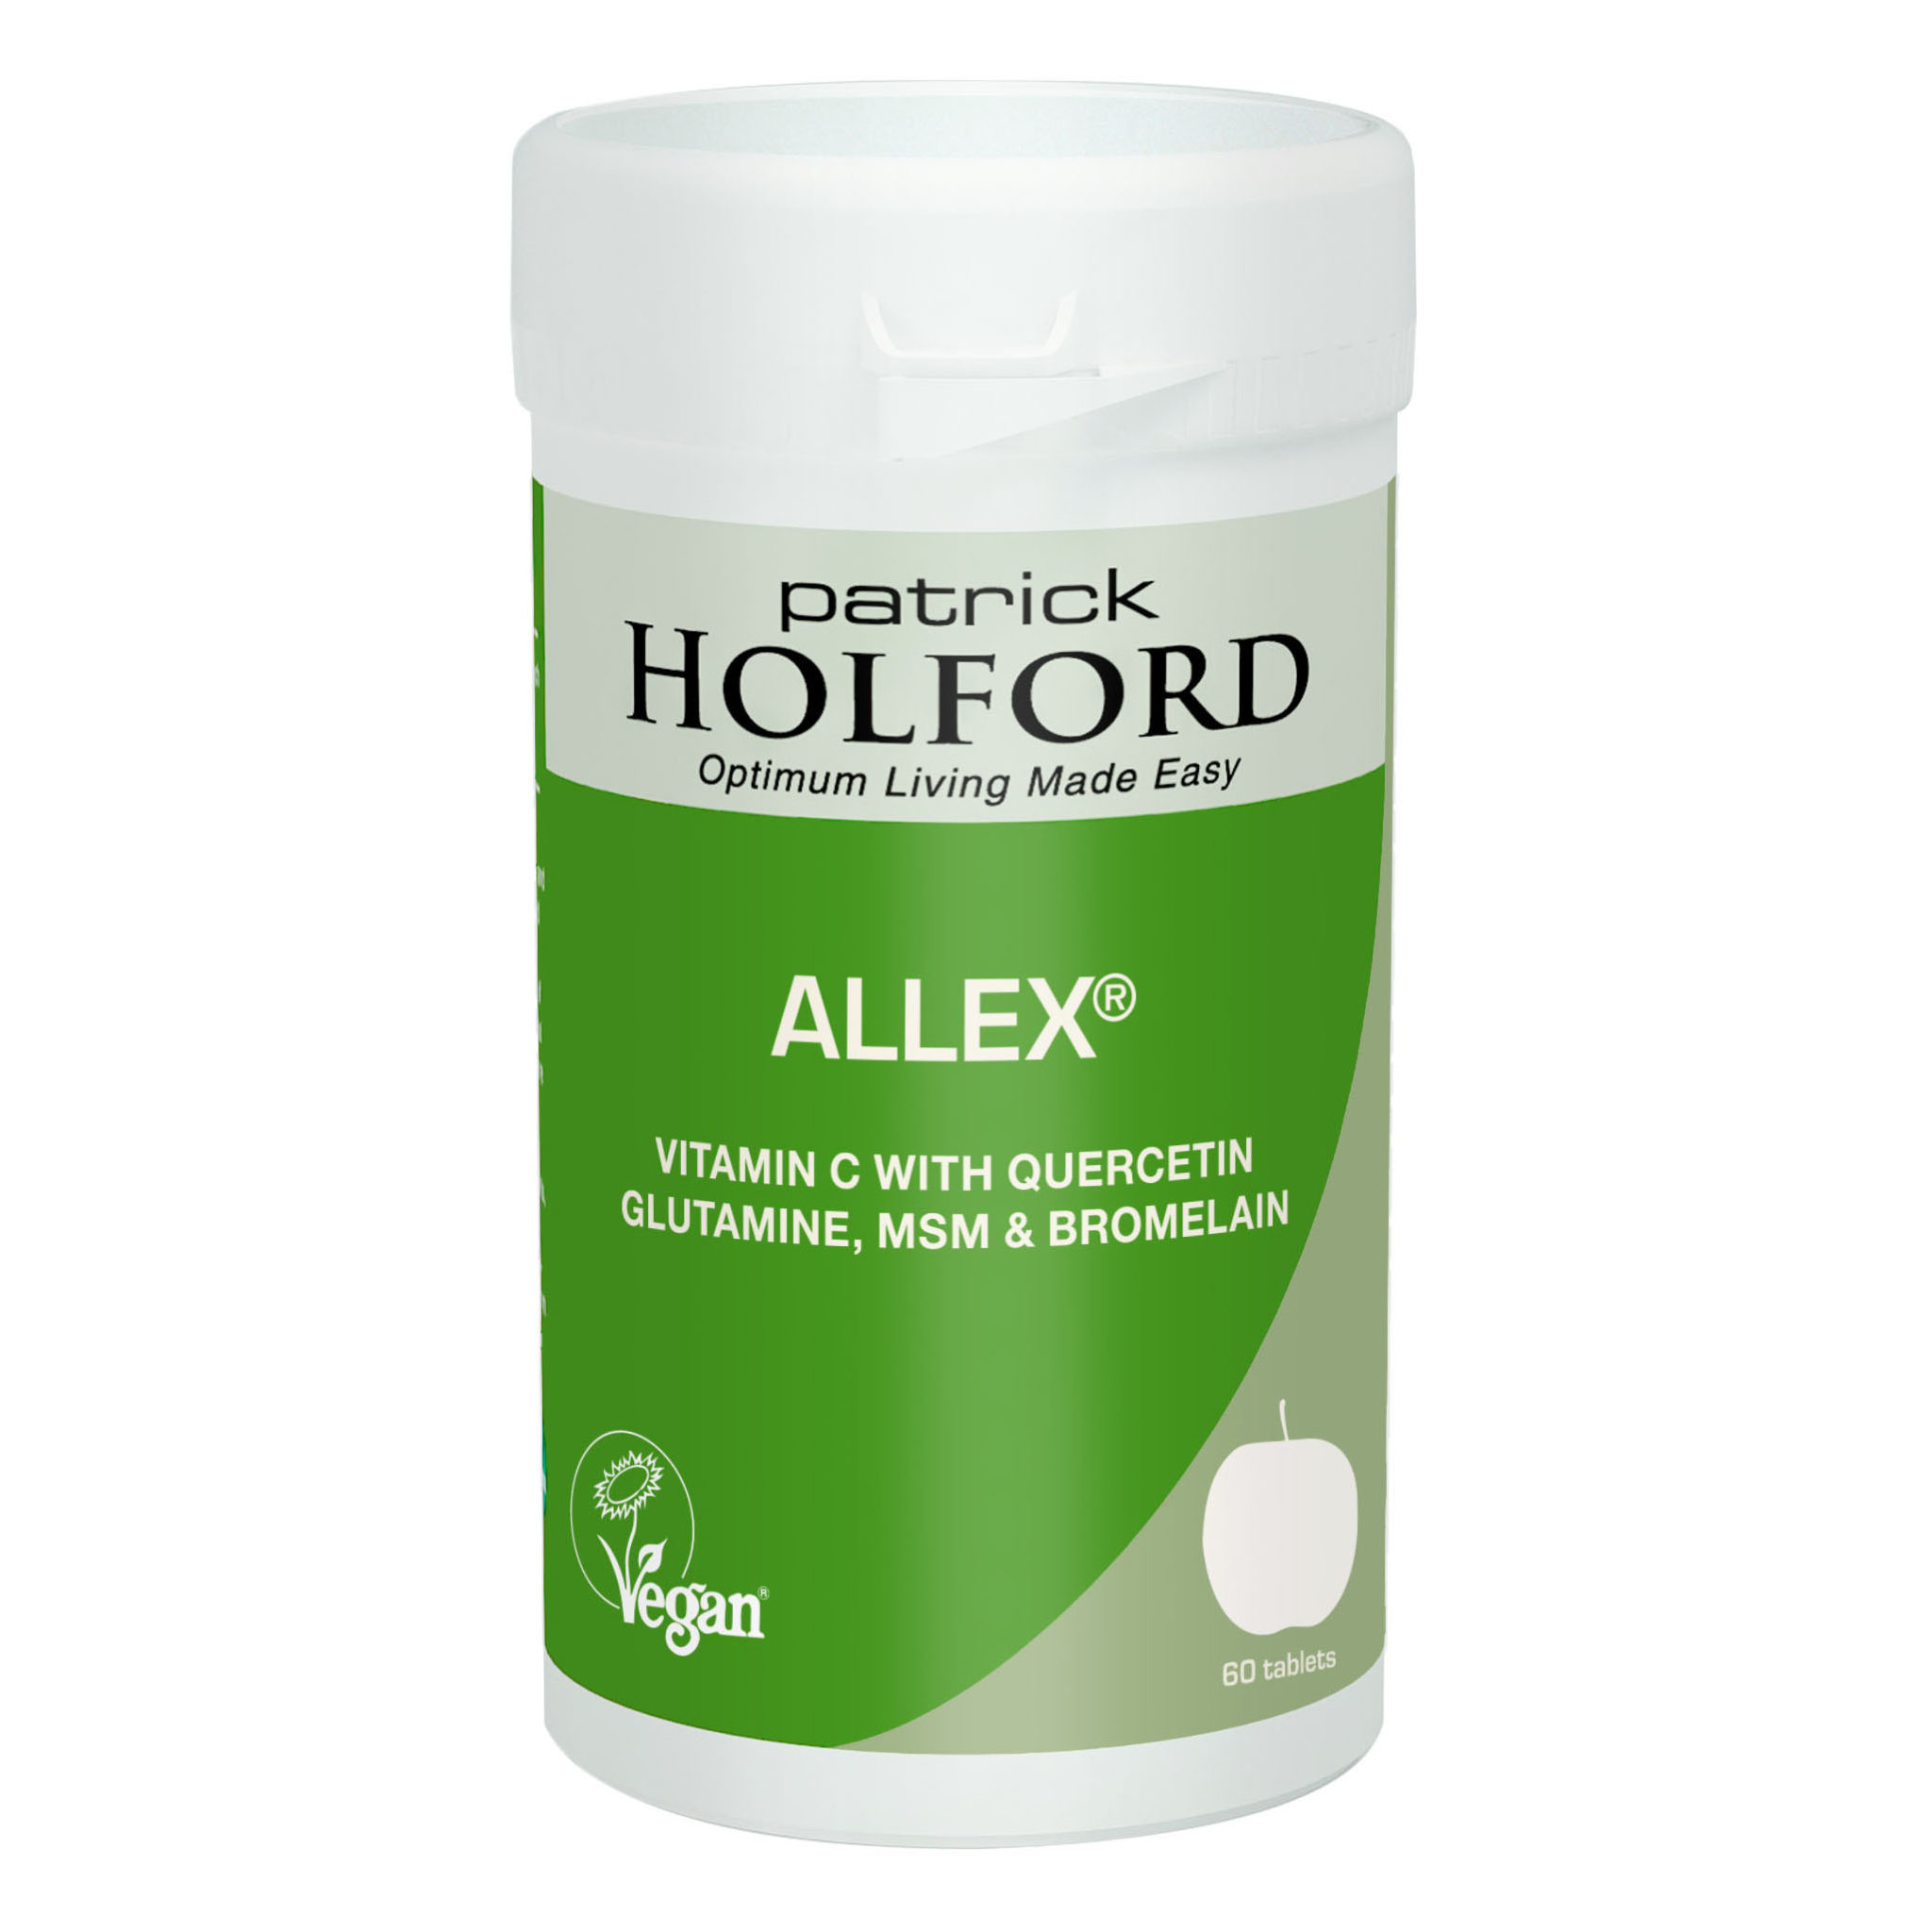 Holford Allex - Immune Support